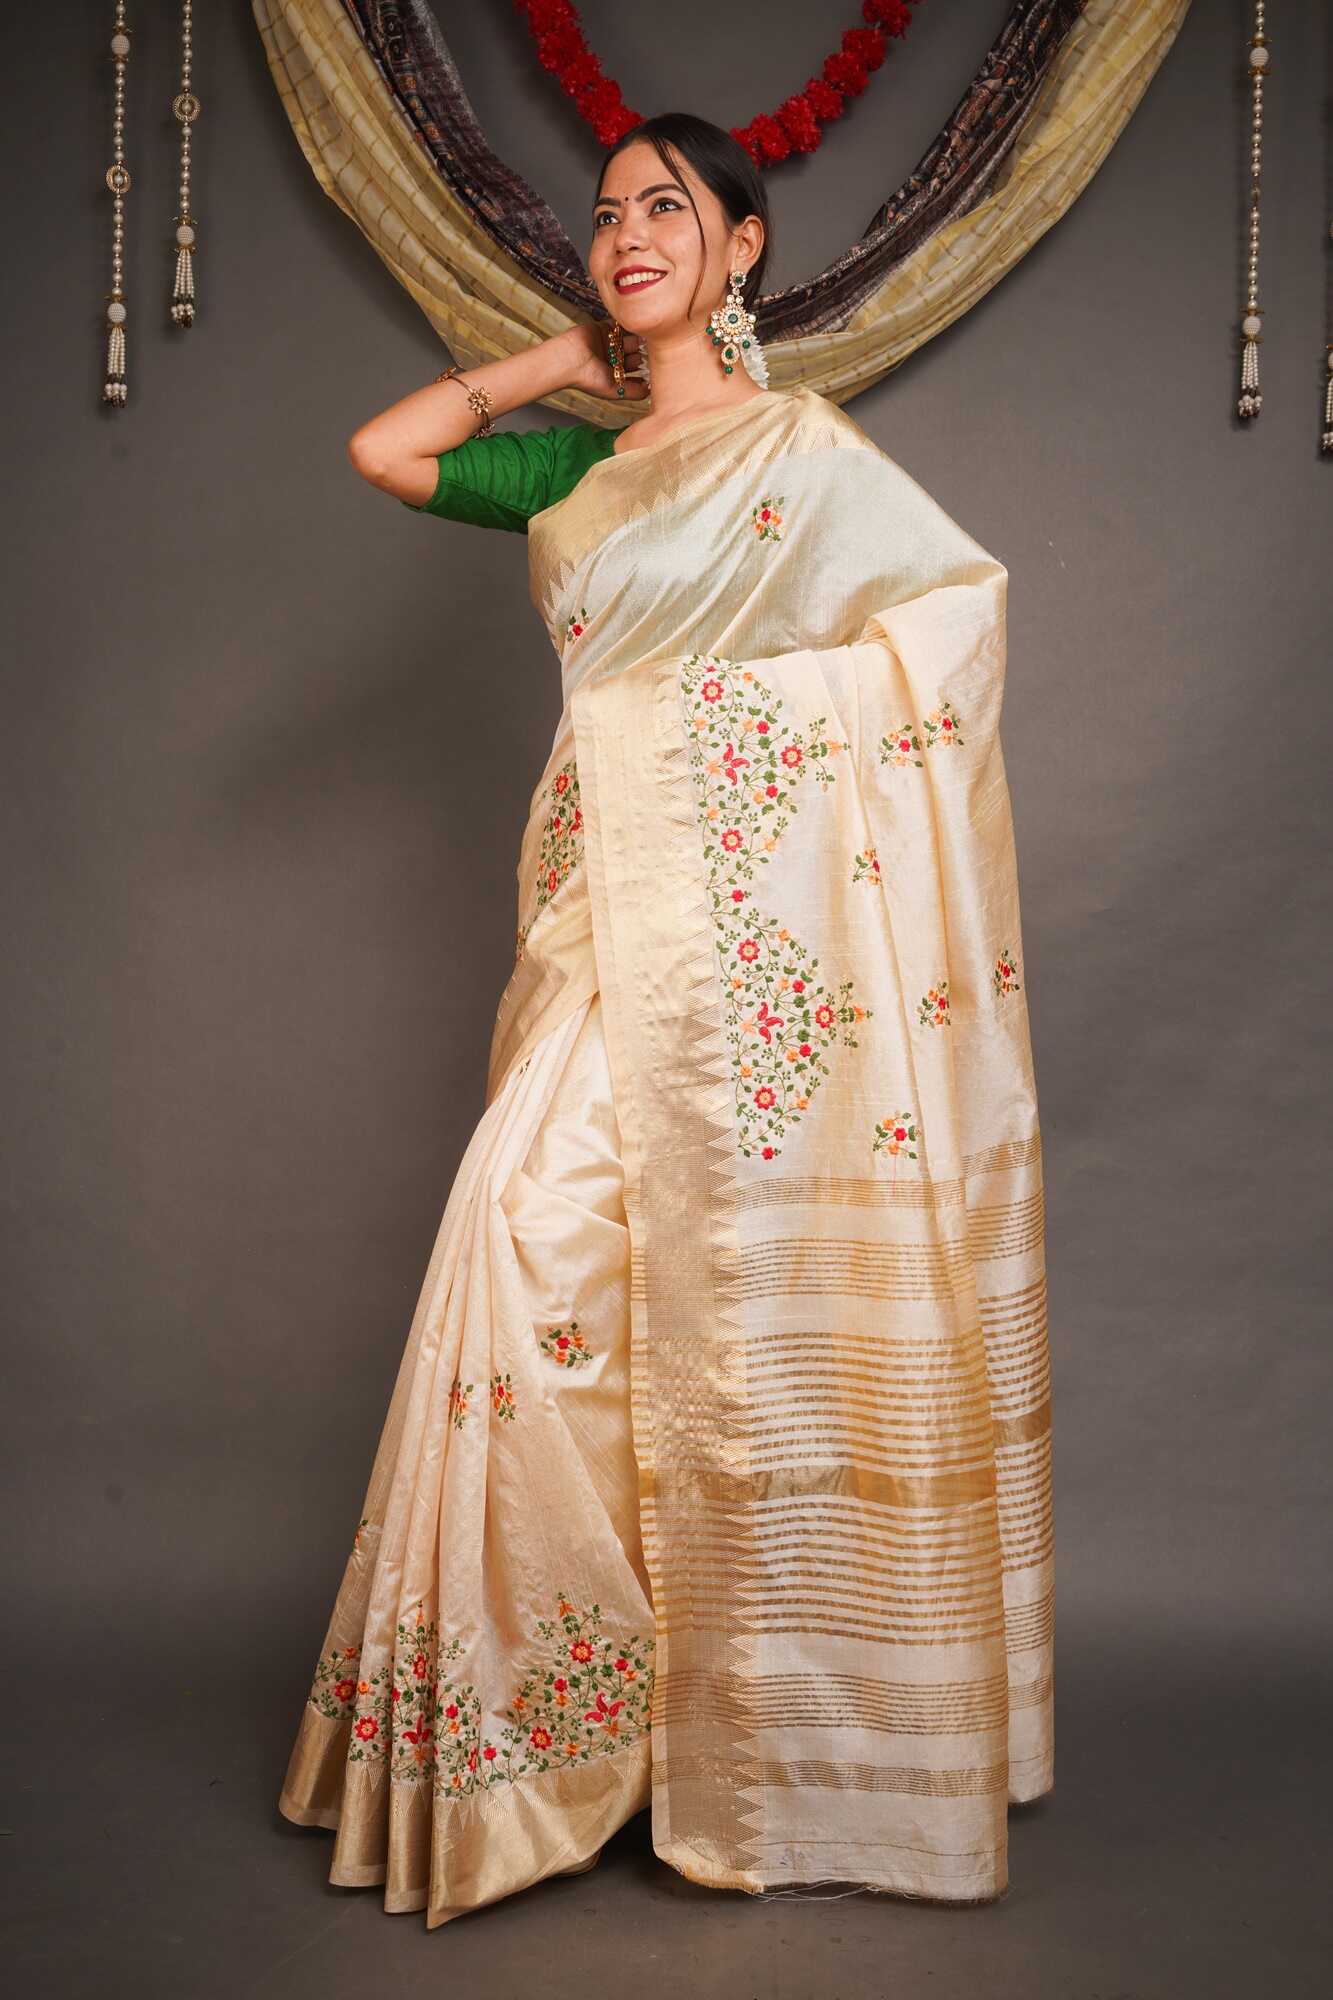 Why do Kerala women wear white and gold saree? - Quora